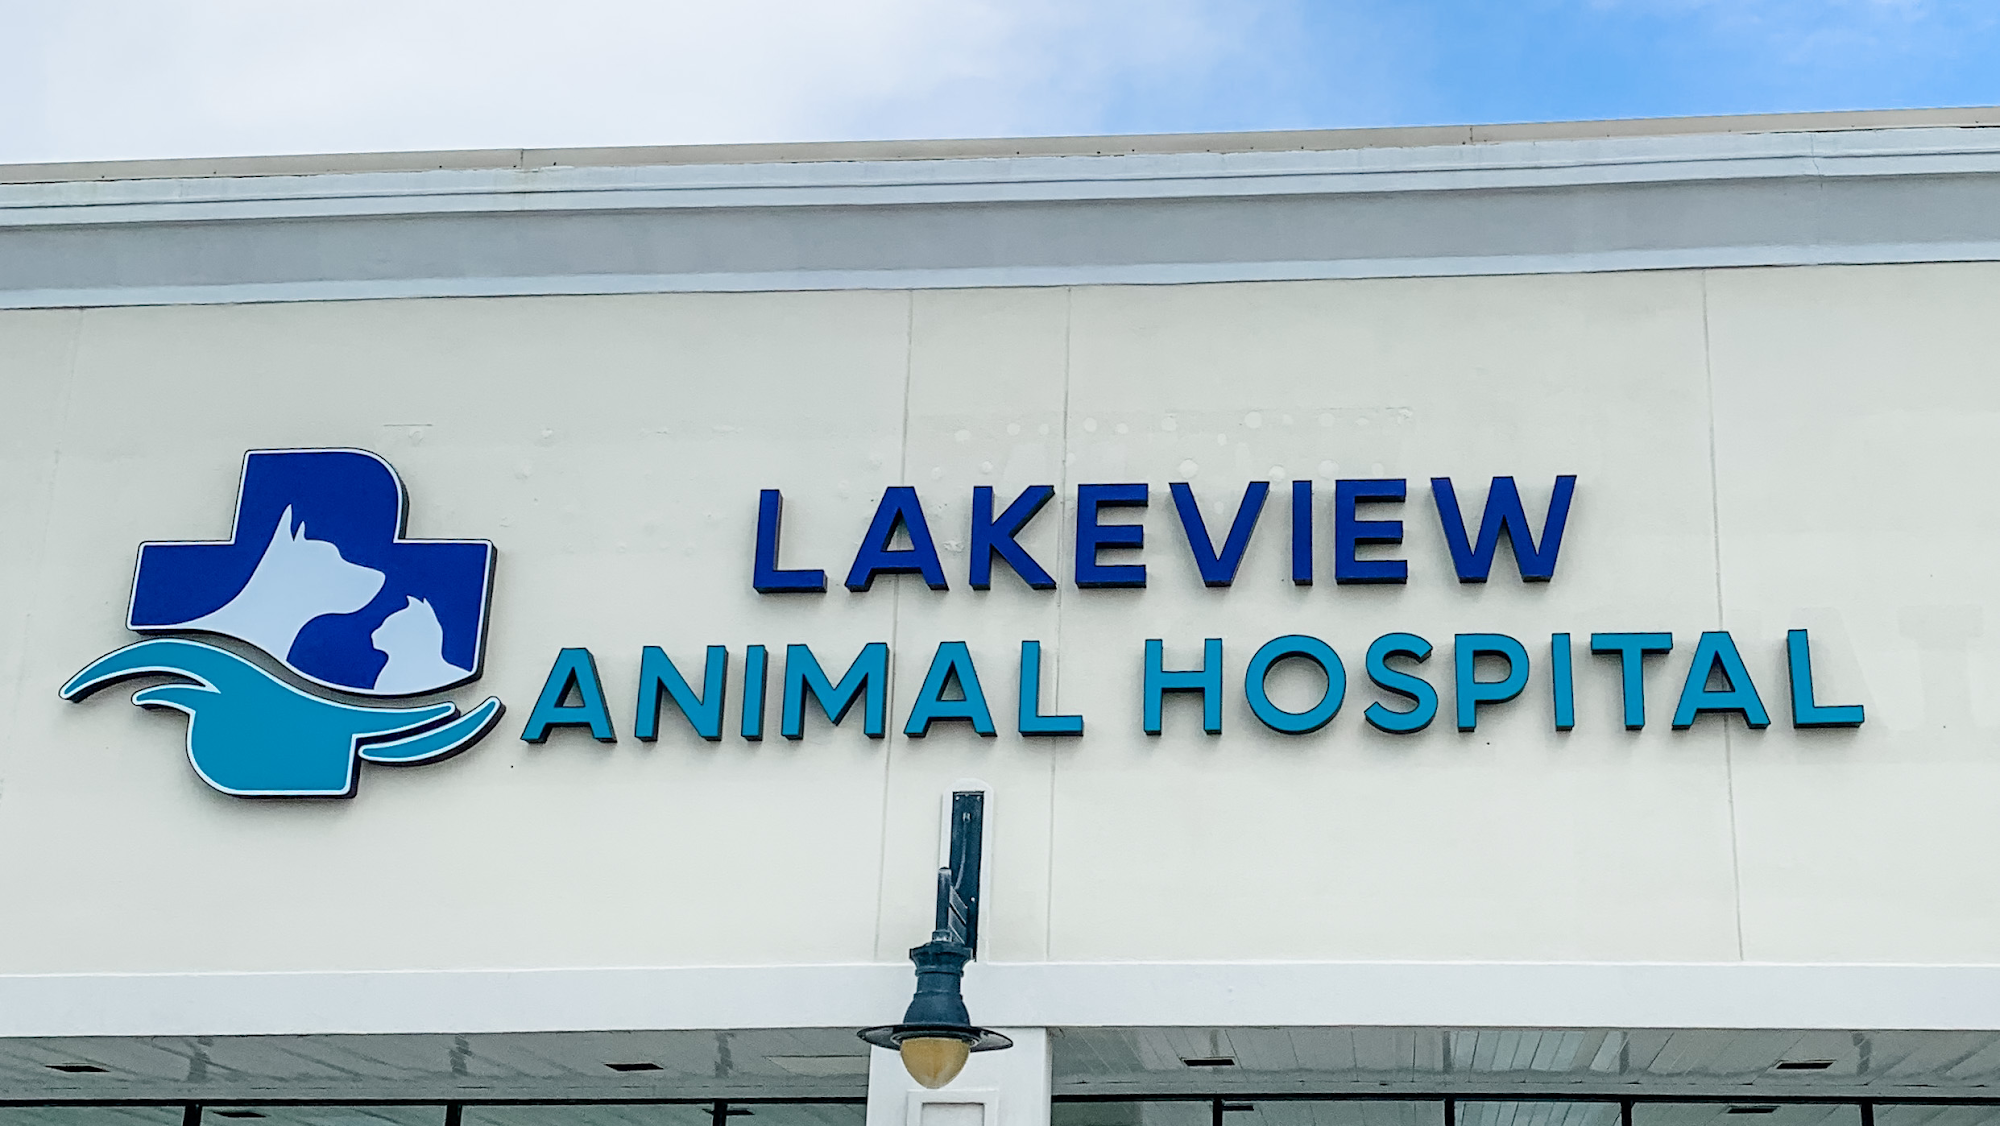 Lakeview Animal Hospital